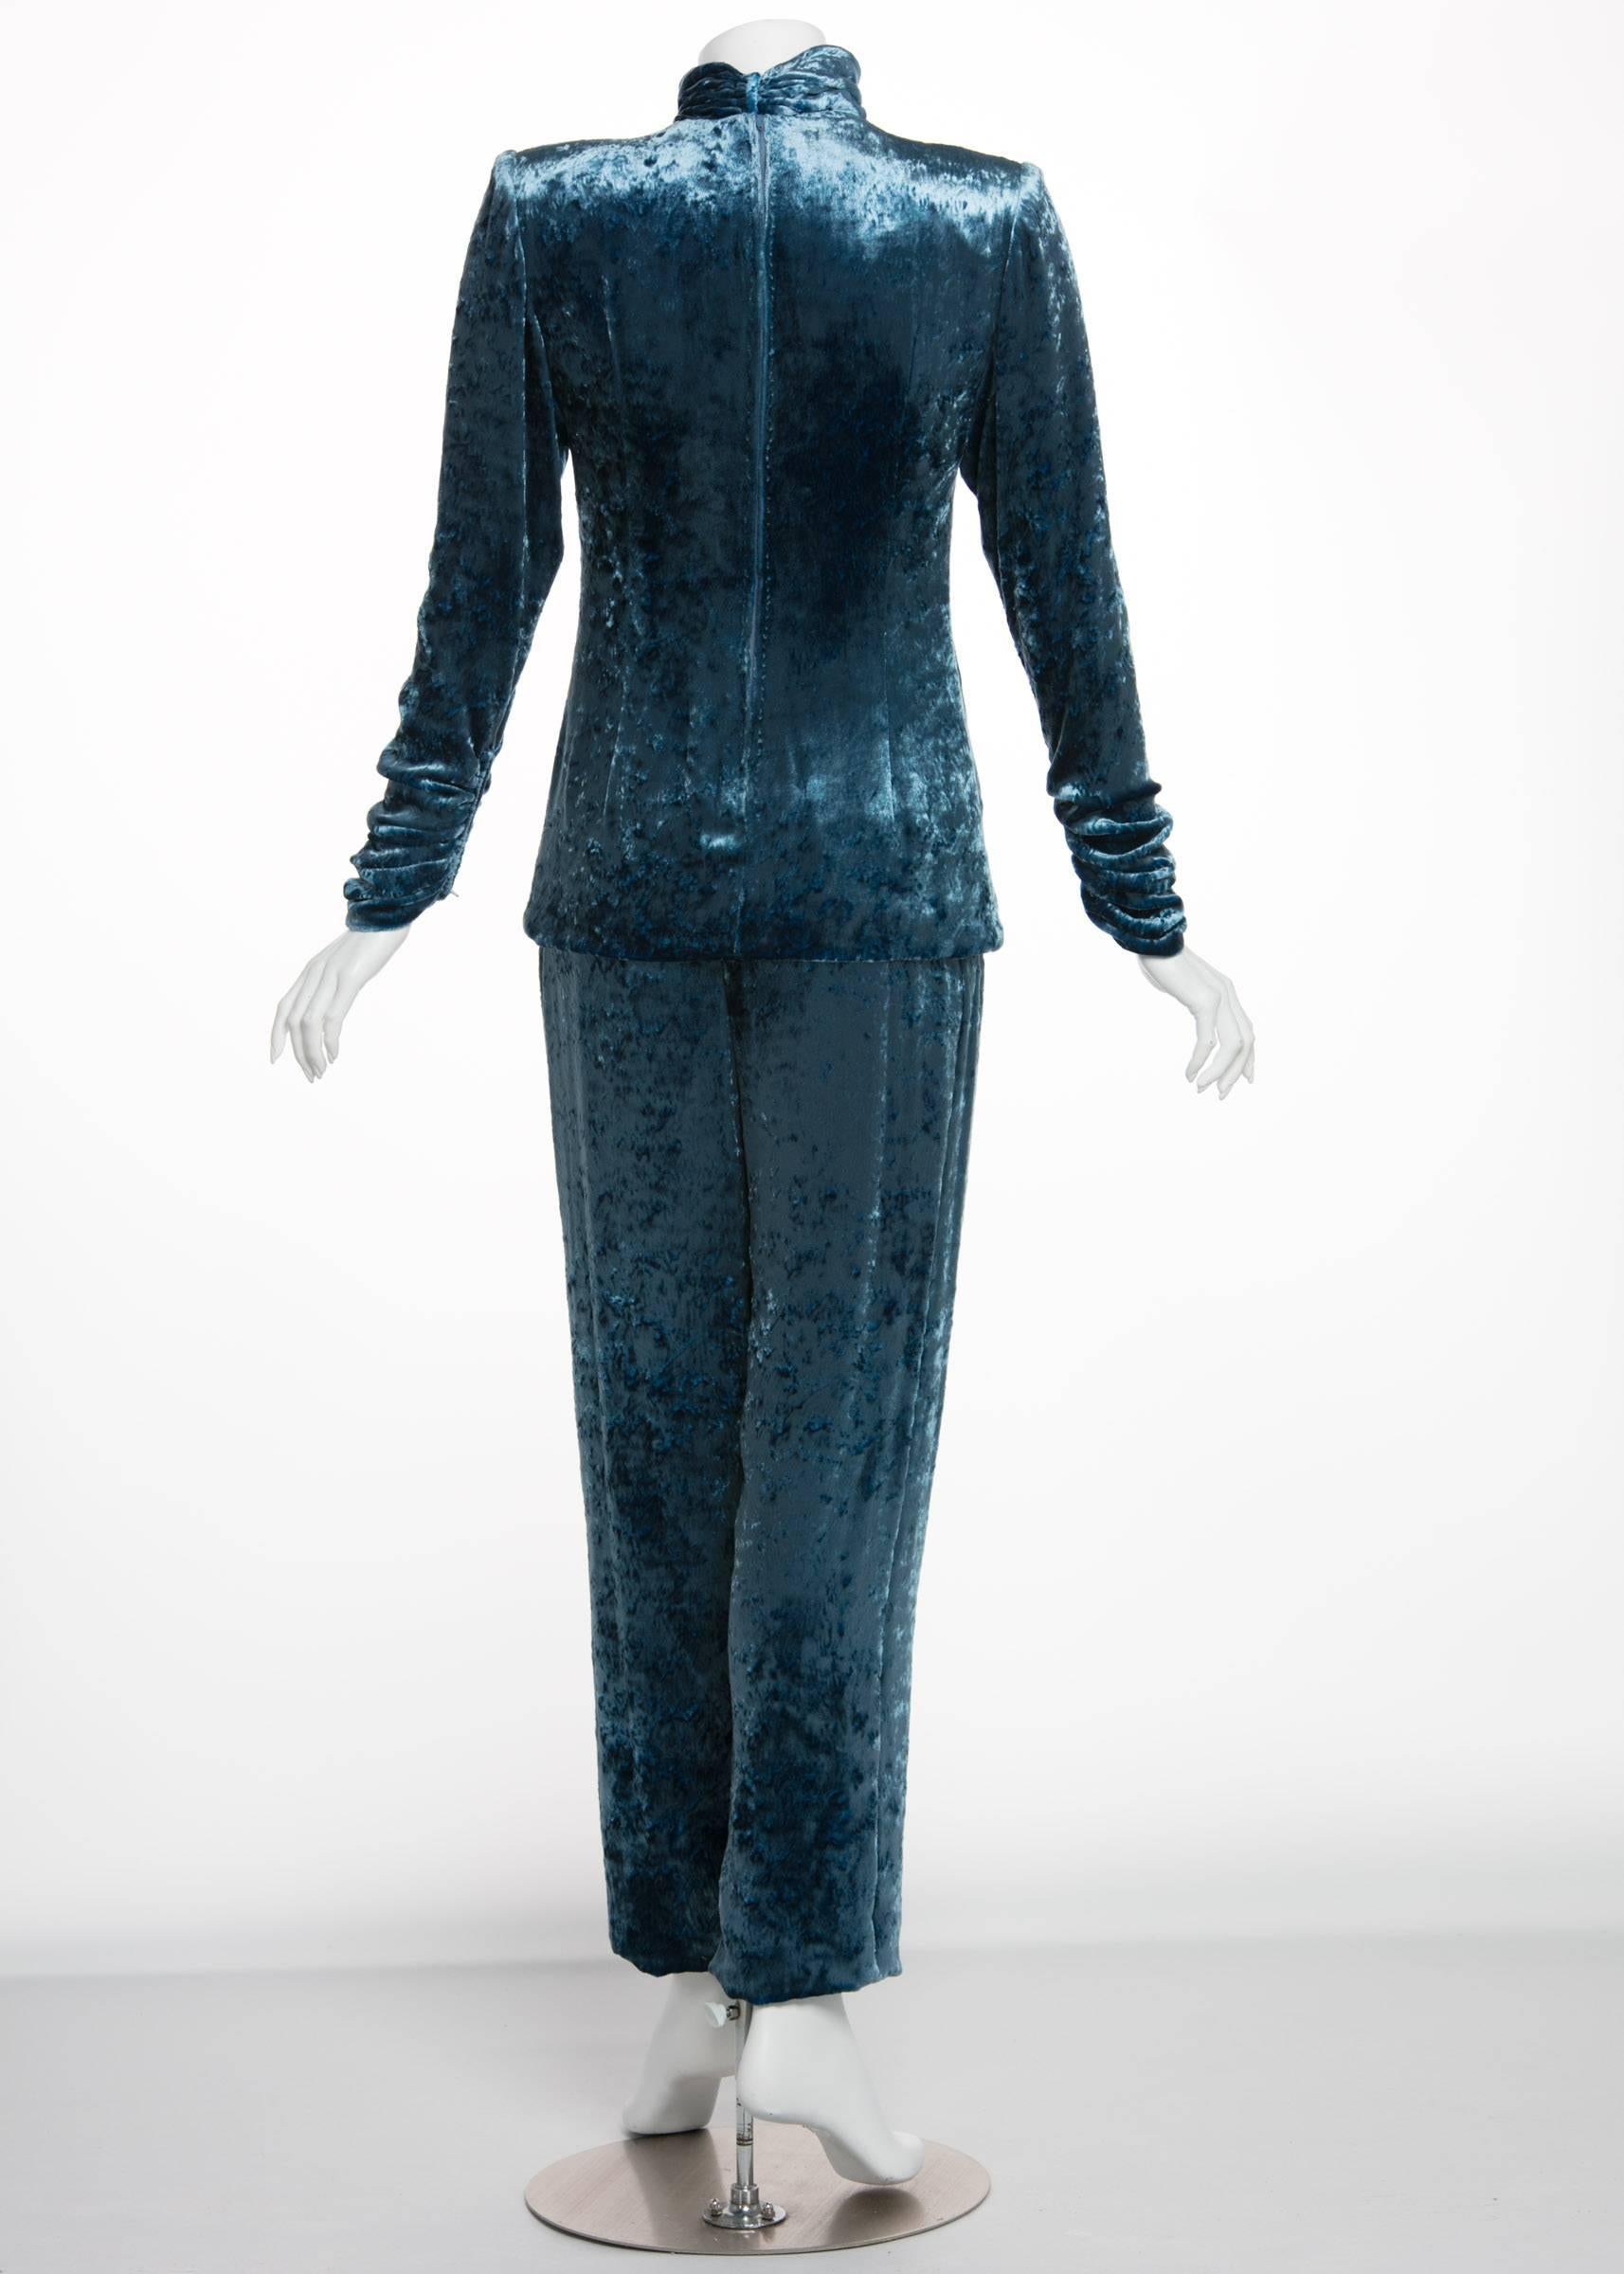 Galanos Couture Blue Velvet Evening Tunic Top Pants Suit, 1980s  For Sale 3